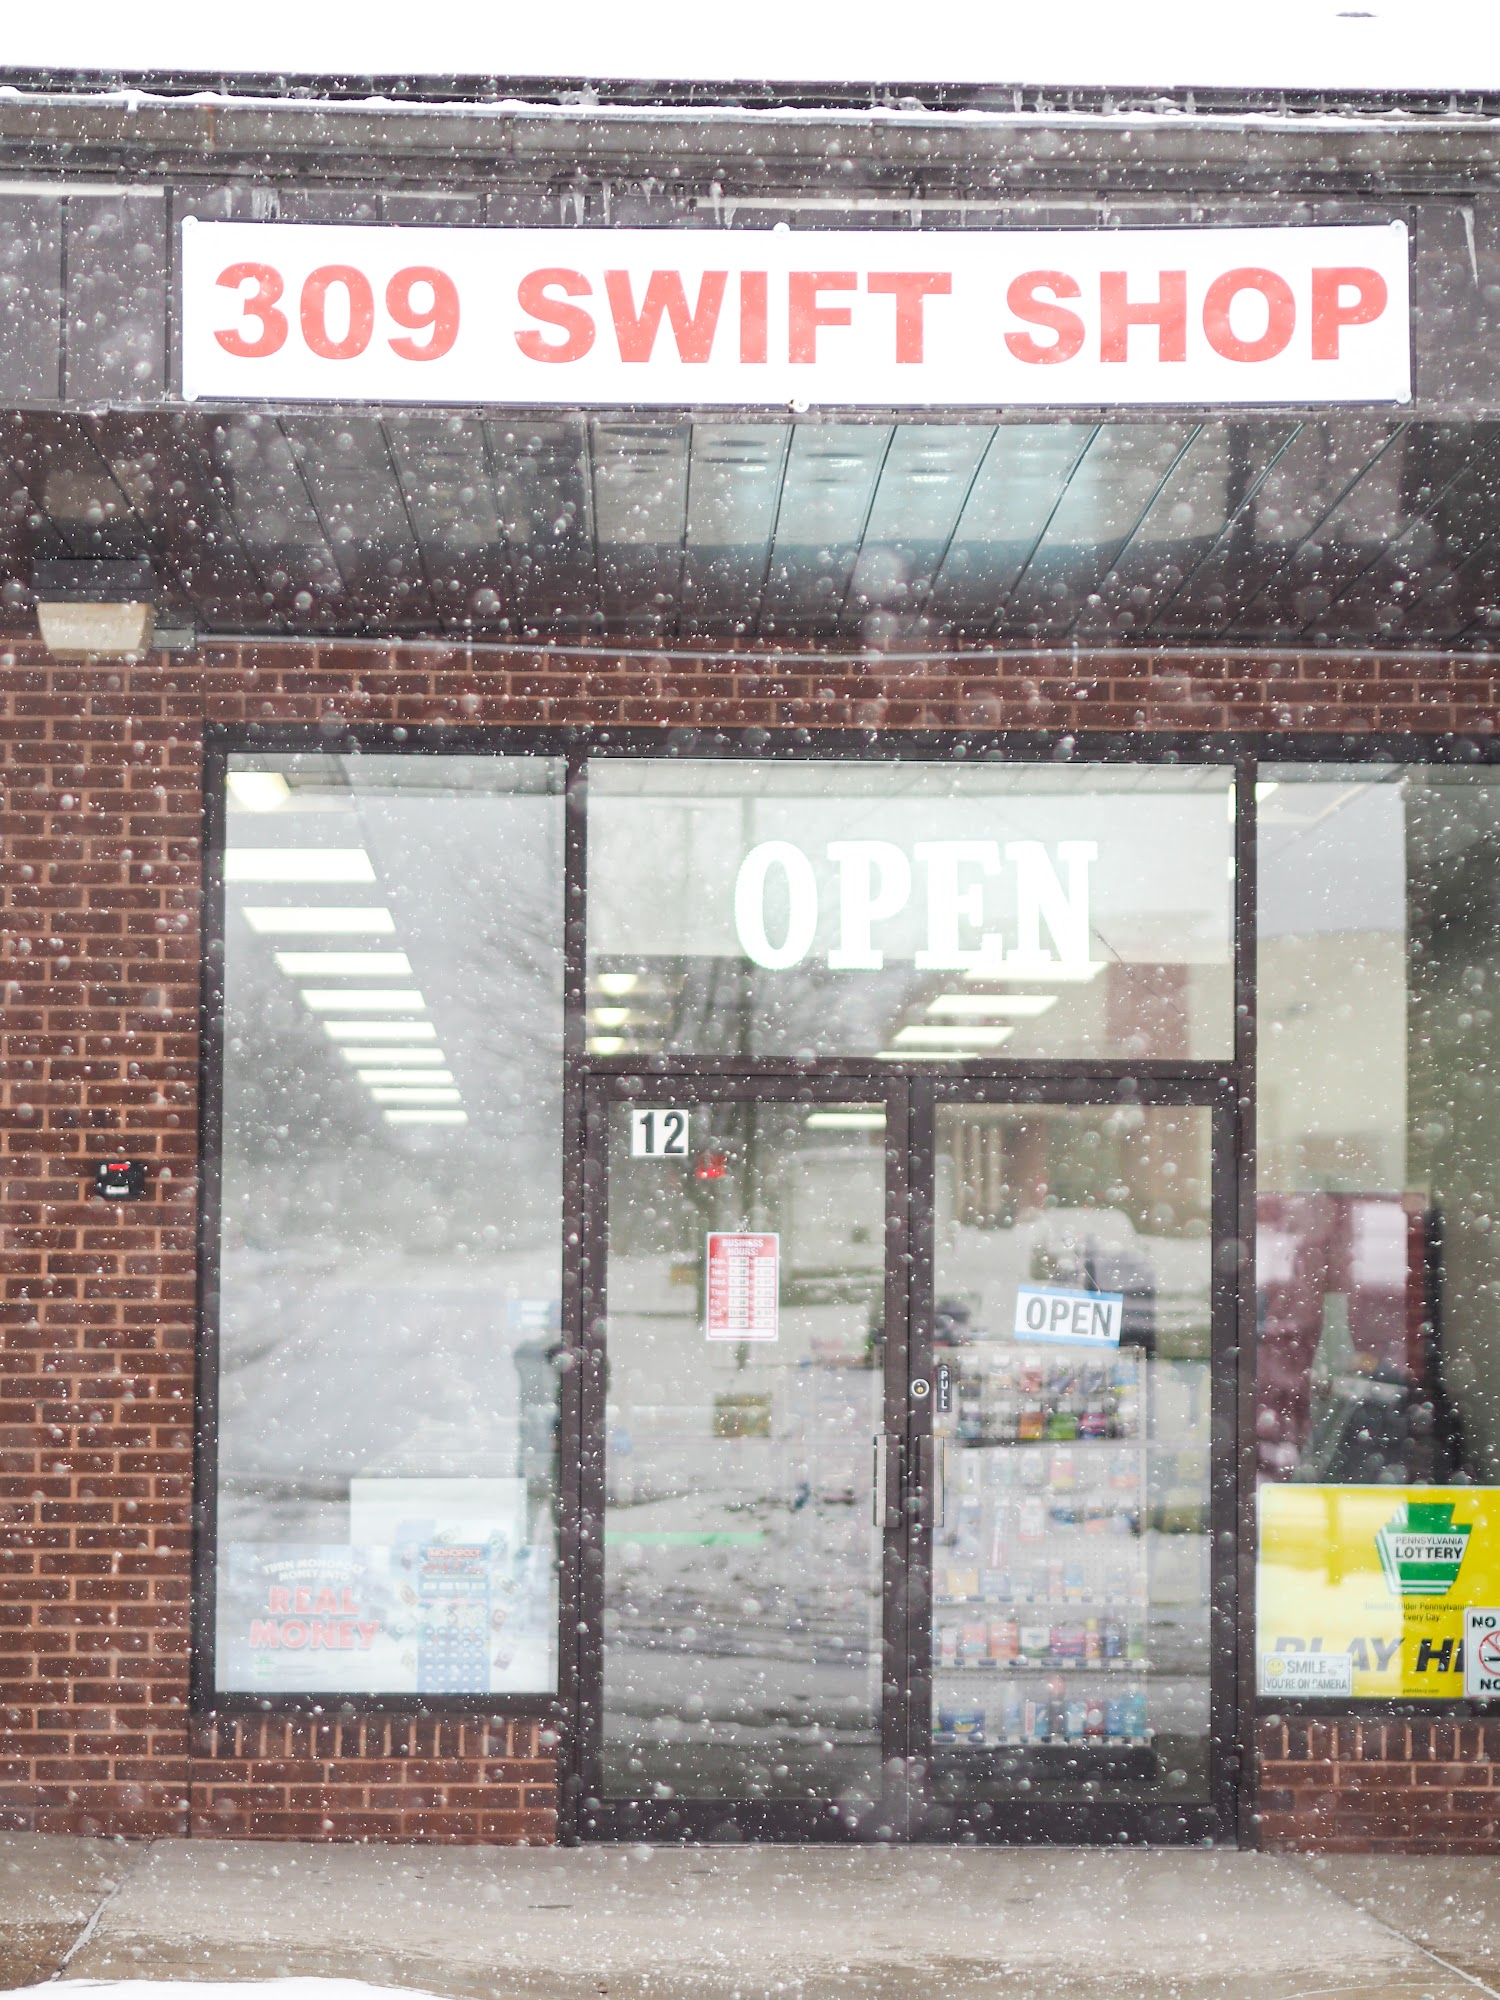 309 Swift Shop (Smoke shop)